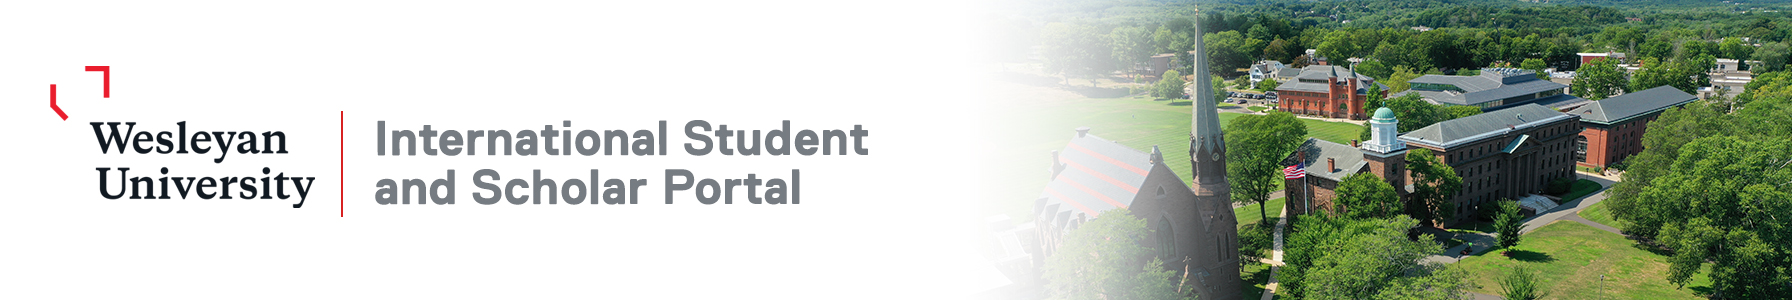 International Student and Scholar Portal - Wesleyan University